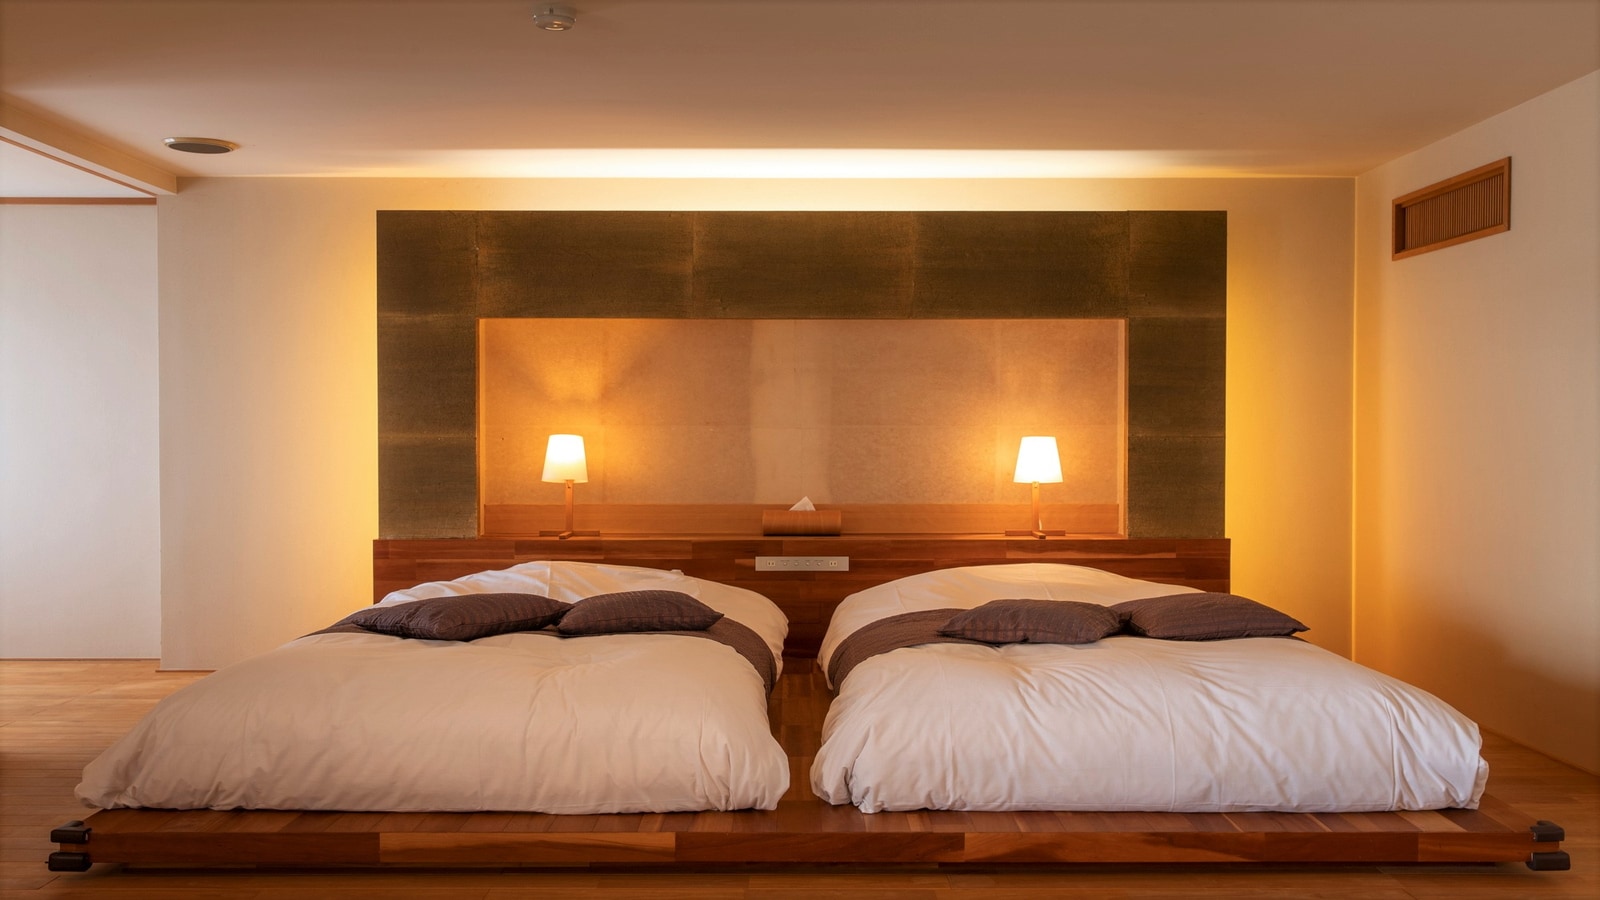 ■Junior Suite■ Approximately 80㎡ 20 tatami mats + wide veranda + guest room open-air bath + cypress bath + terrace